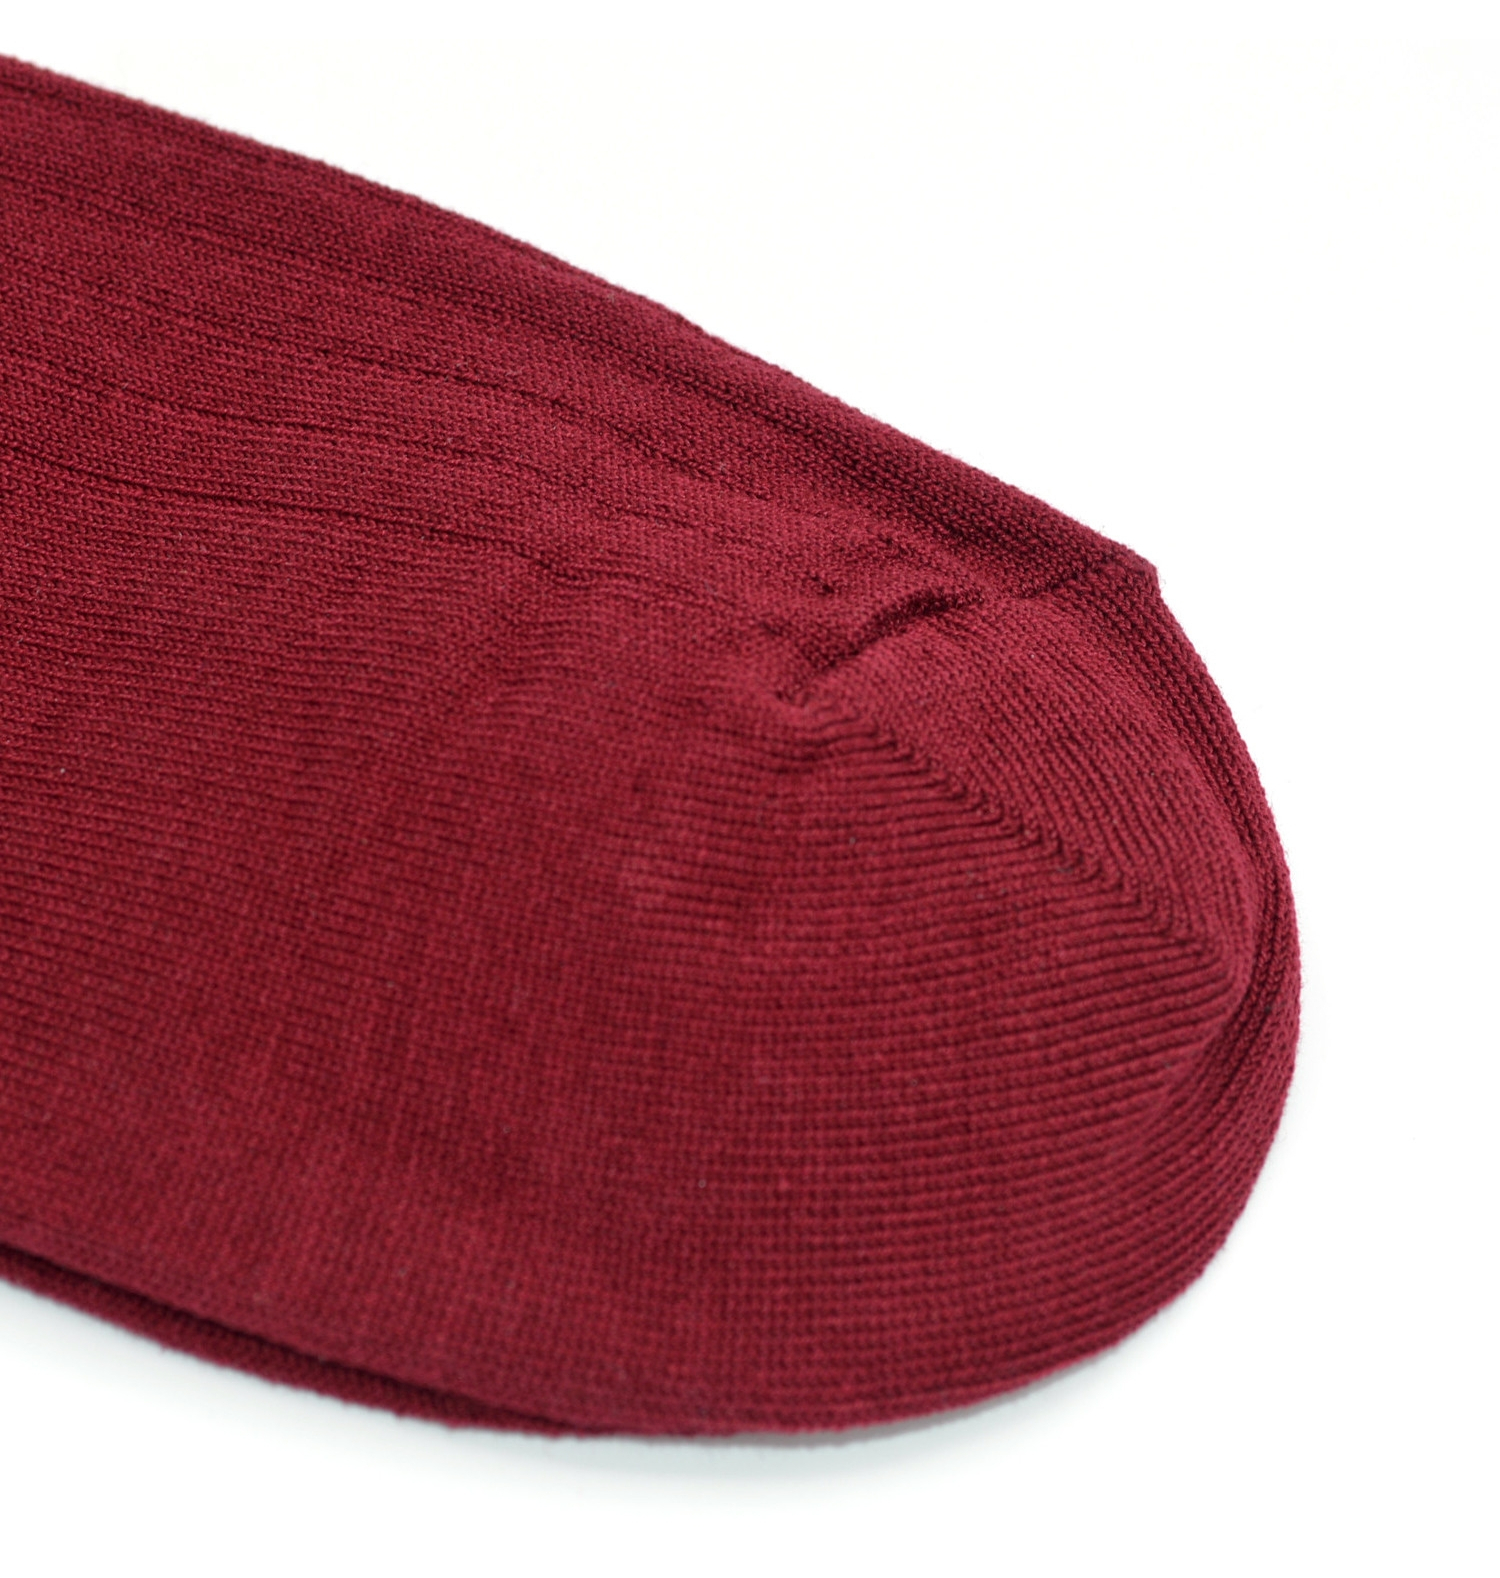 Bugatchi Geometric Mercerized Cotton Blend Dress Socks in Bordeaux